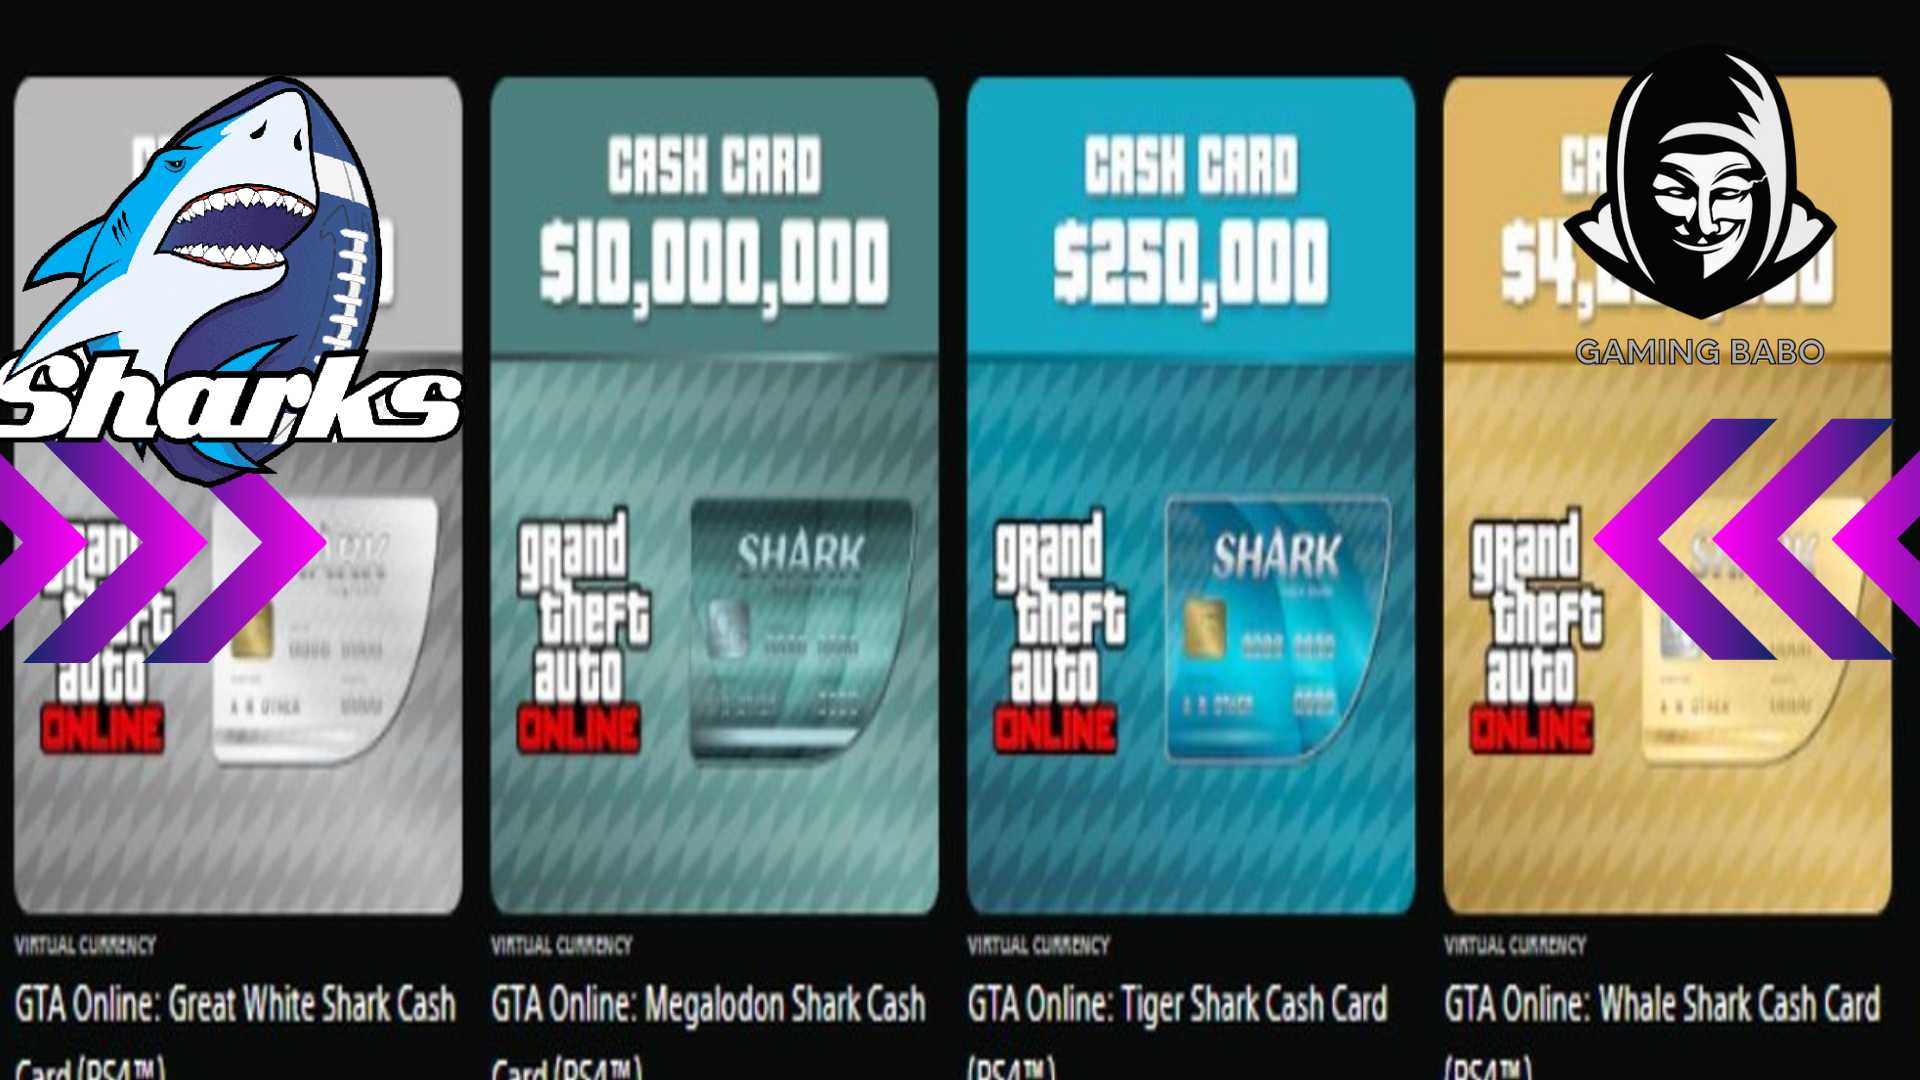 GTA 5 Shark card tips and tricks